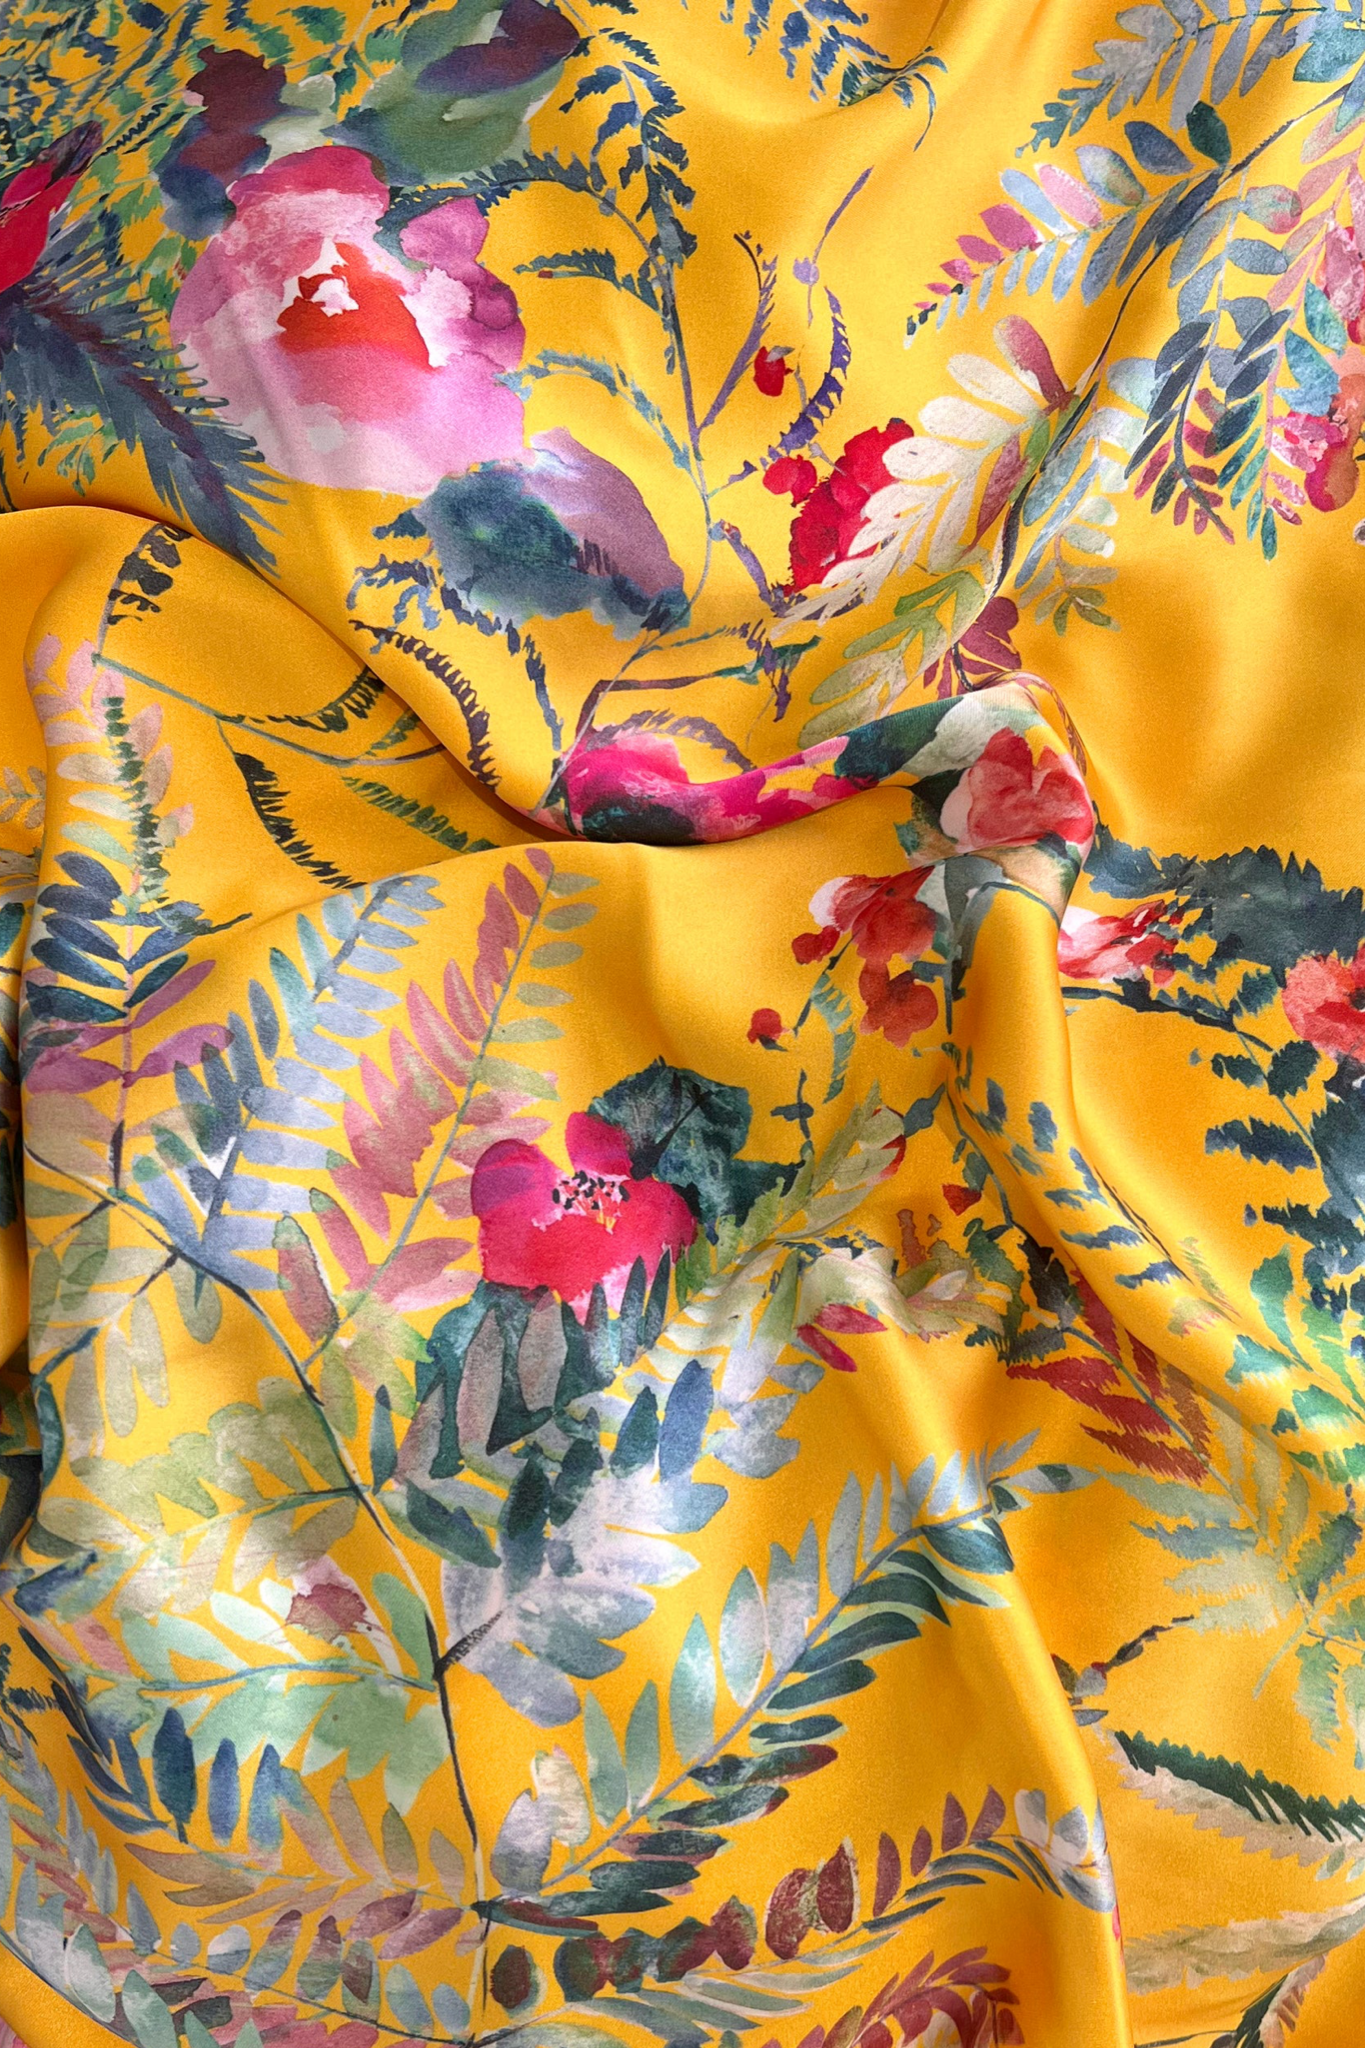 Caribbean Floral Print in a golden sunflower hue - Fabric Close Up - Harleen Kaur